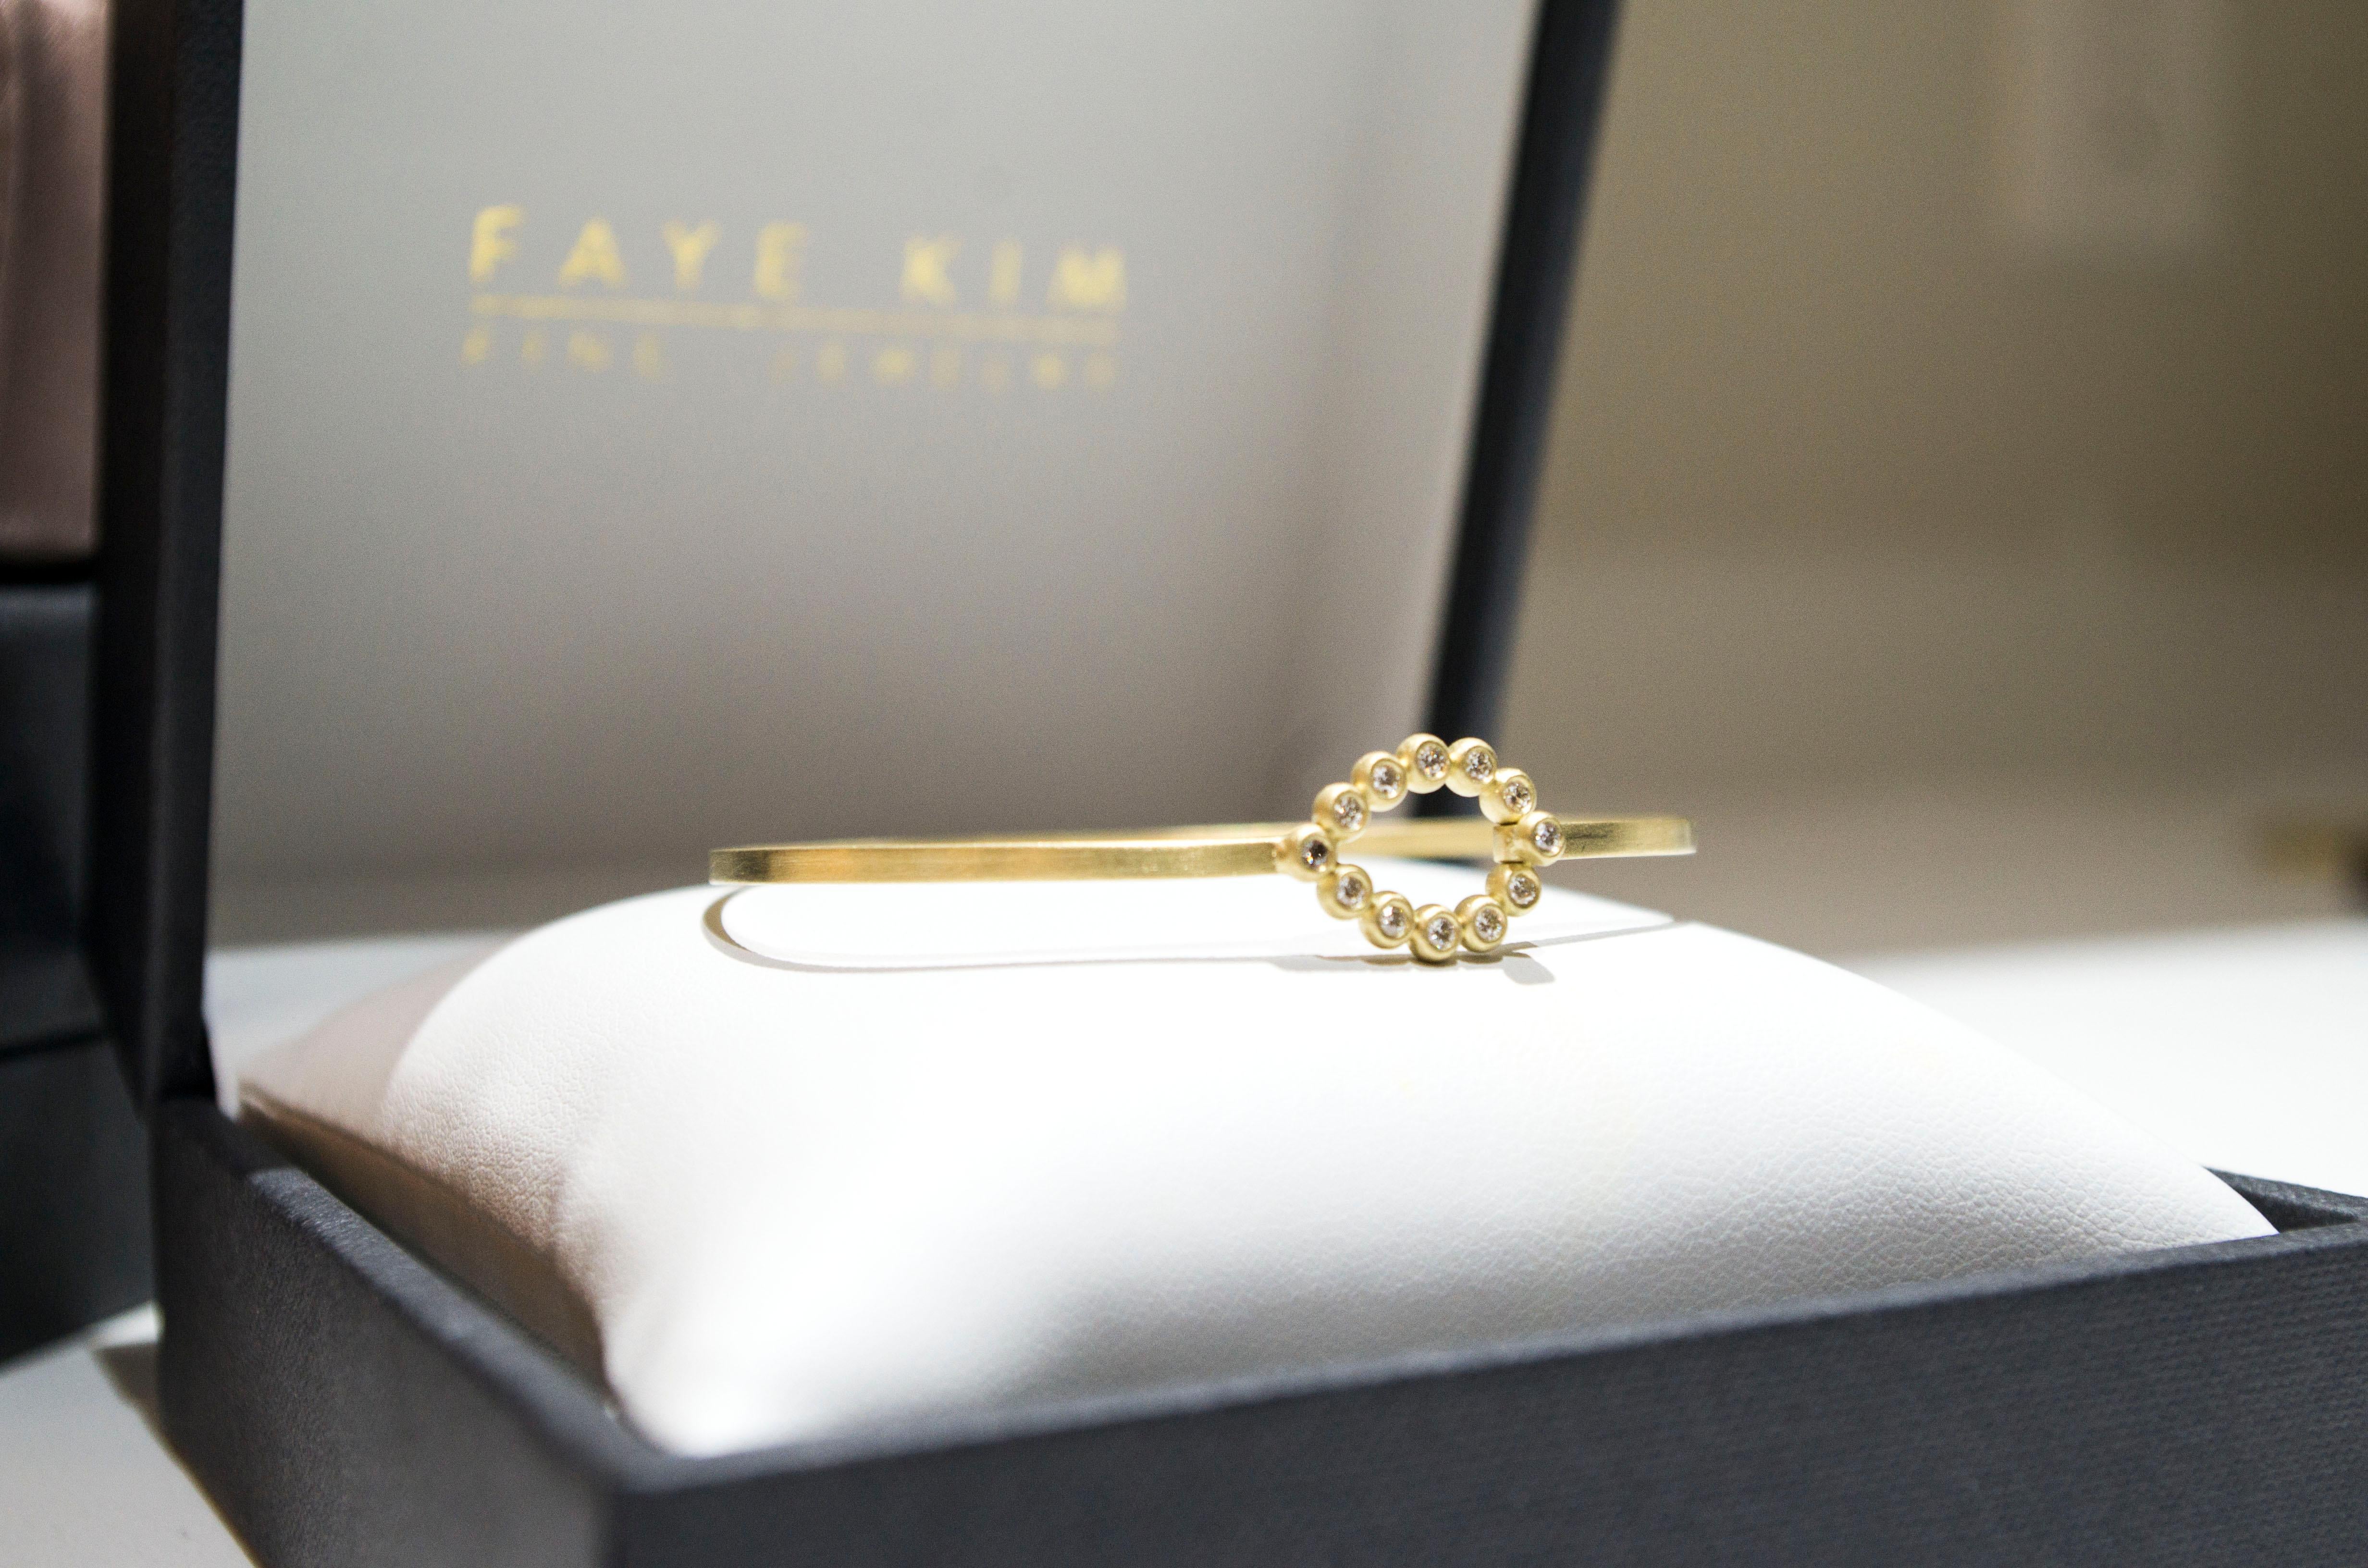 Round Cut Faye Kim 18k Gold Bangle Bracelet with Diamond Tear Drop Closure For Sale